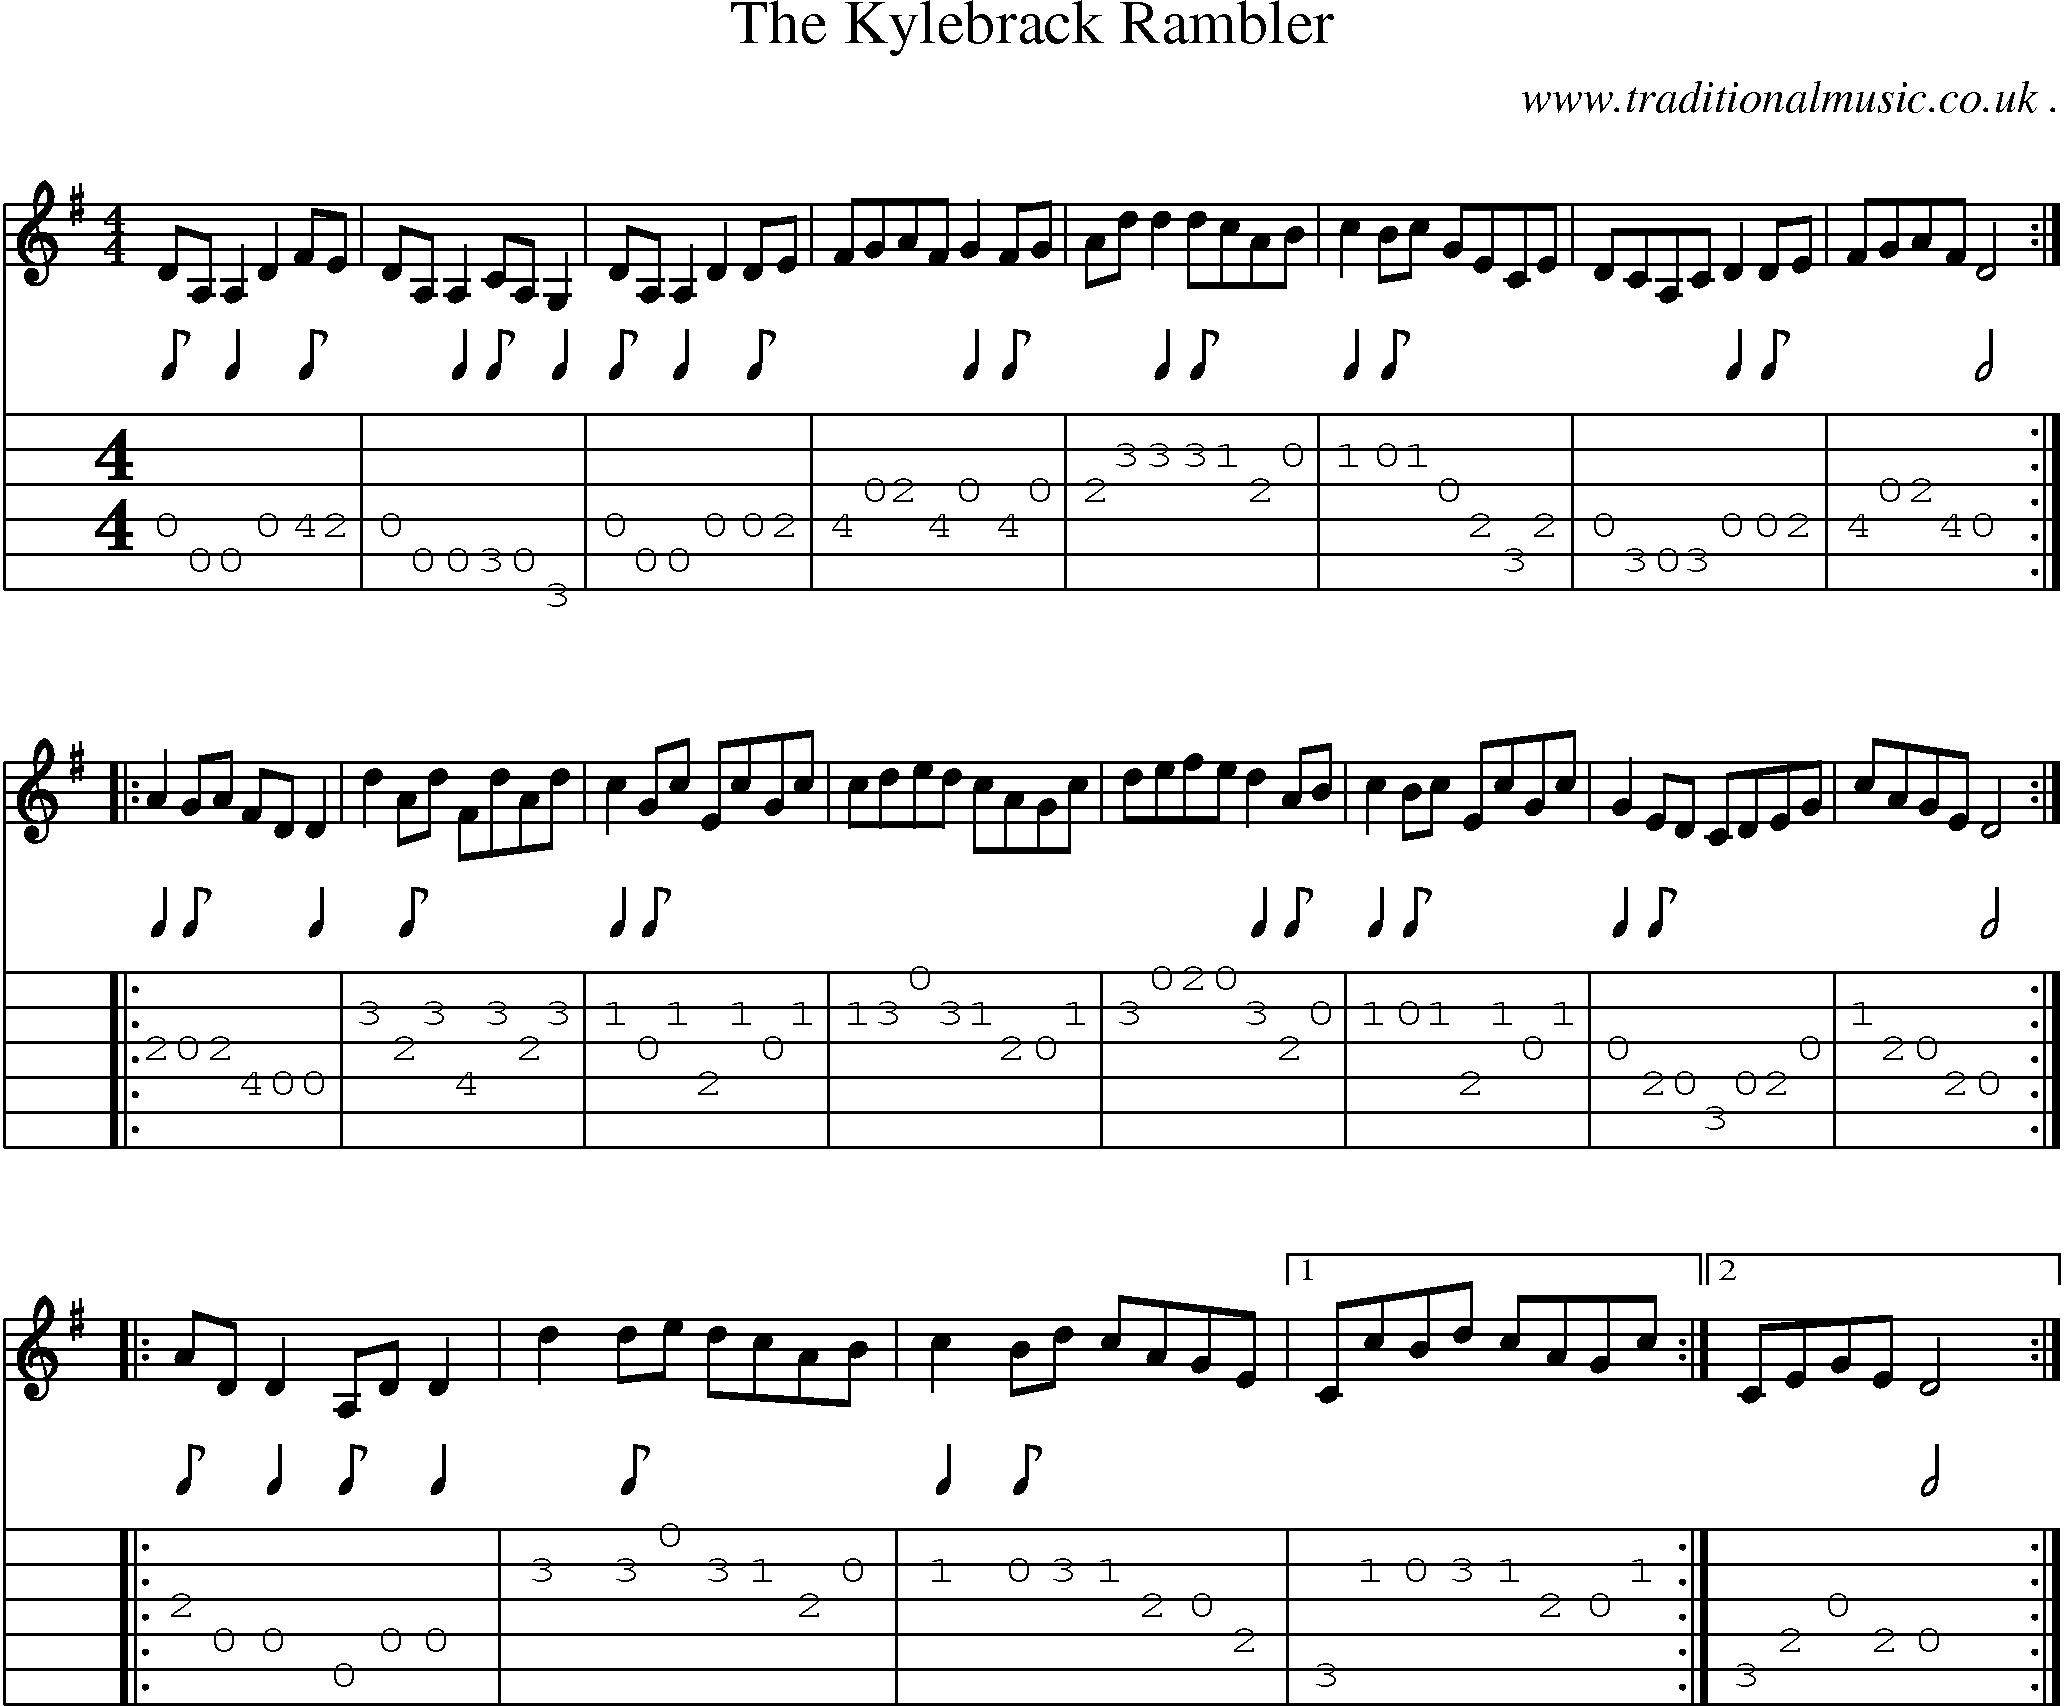 Sheet-Music and Guitar Tabs for The Kylebrack Rambler